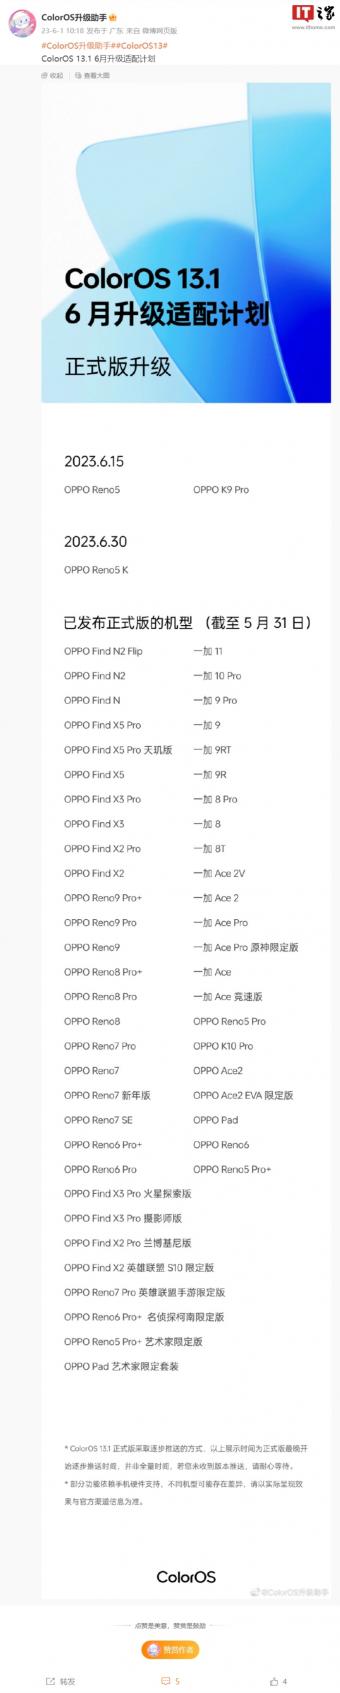 OPPO ColorOS 升级助手公布 ColorOS 13.1 系统 6 月升级适配计划